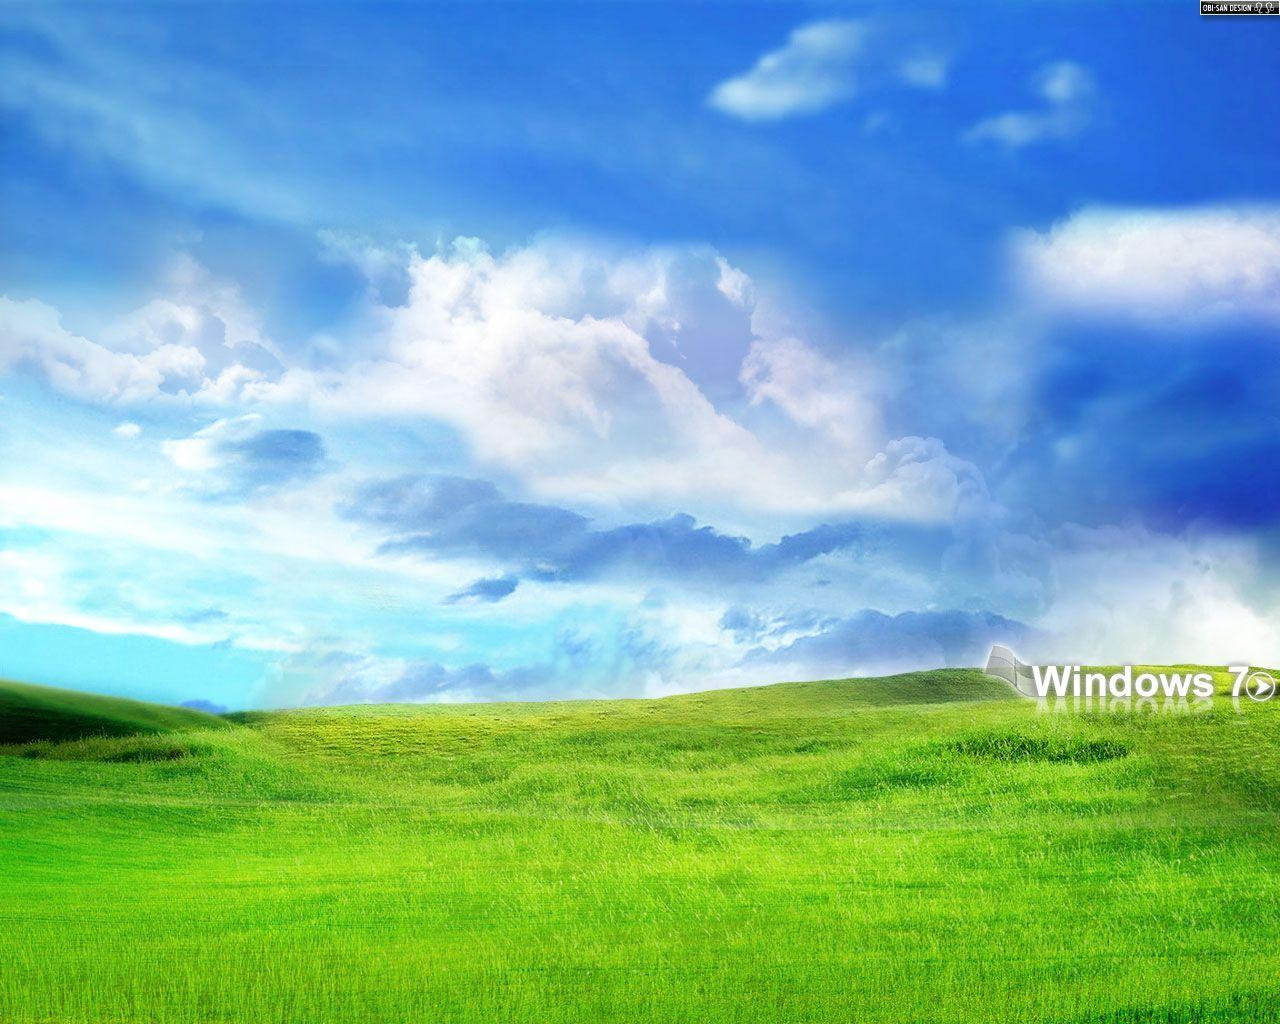 Windows Background 55 14062 HD Wallpaper. Wallroro